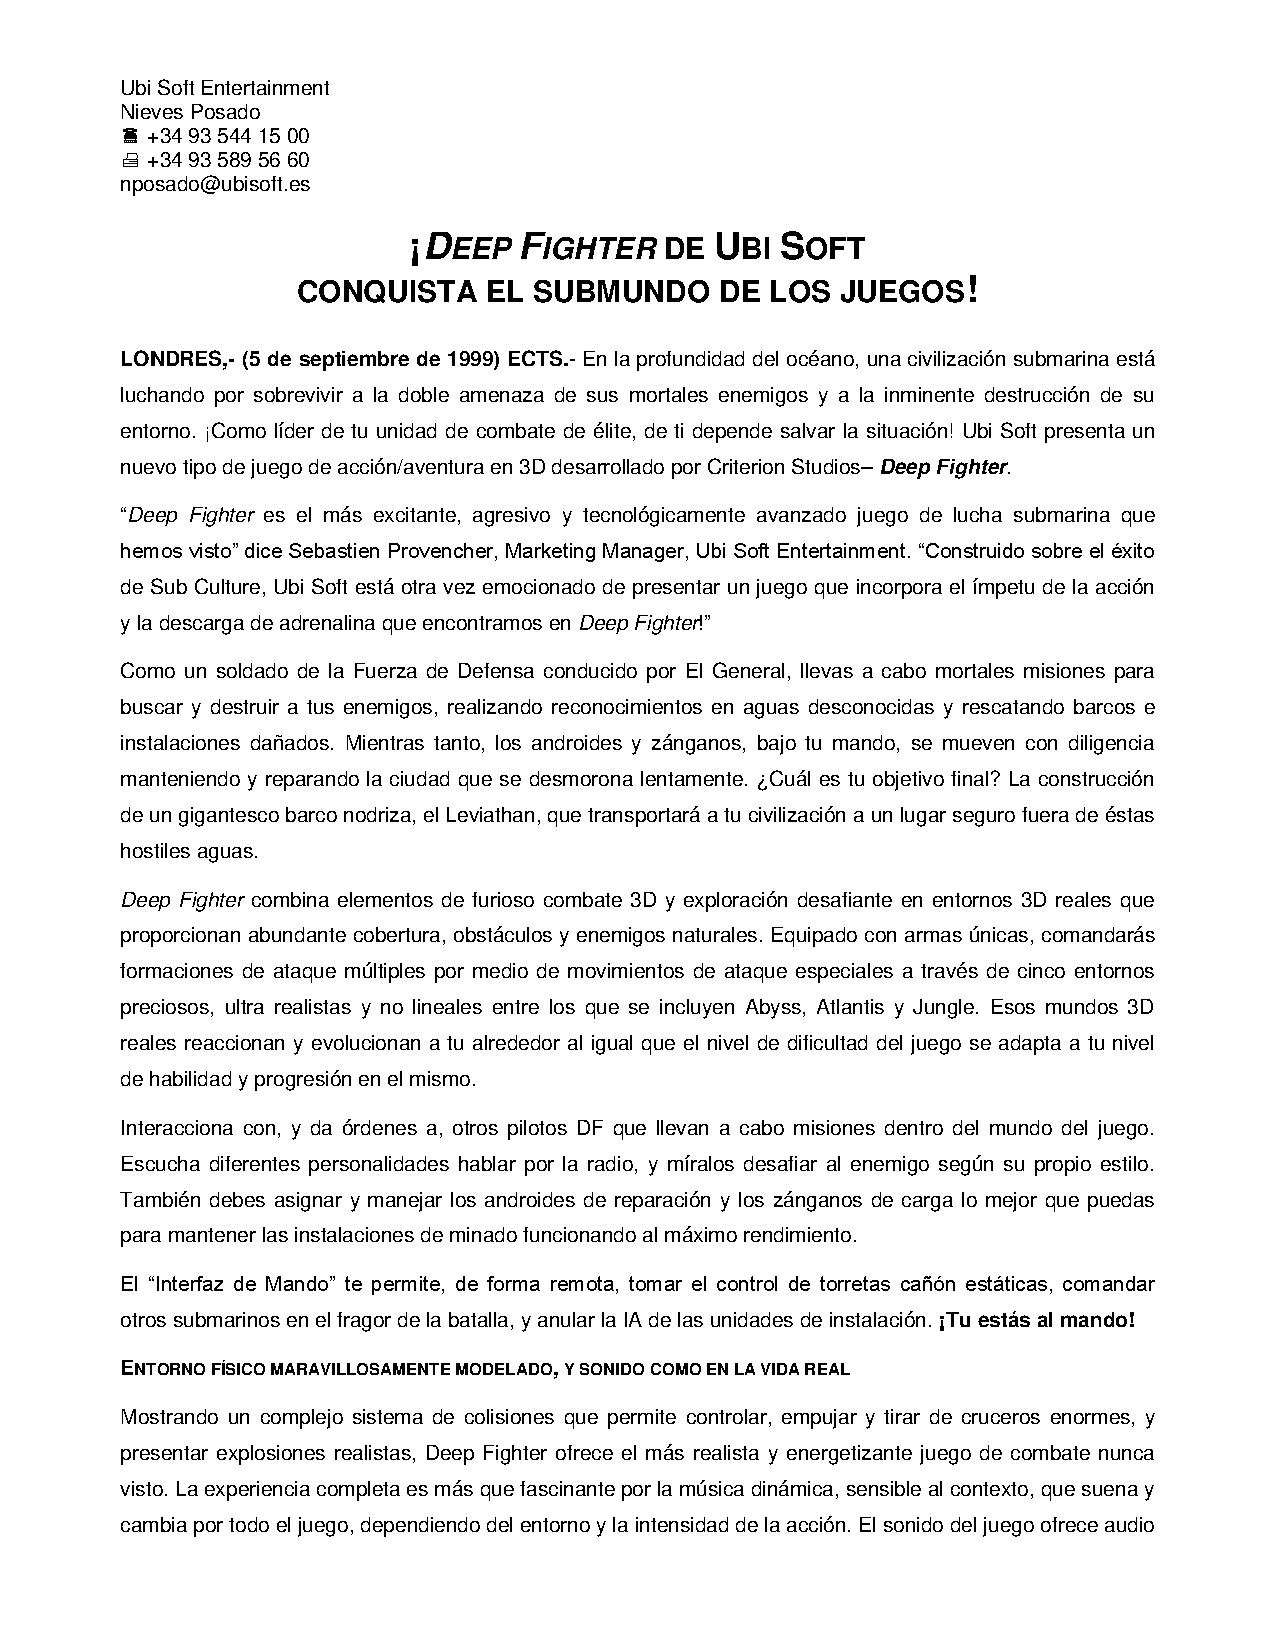 UbiSoftDPKECTS1999 DeepFighter DeepFighterPress-Spanish.pdf